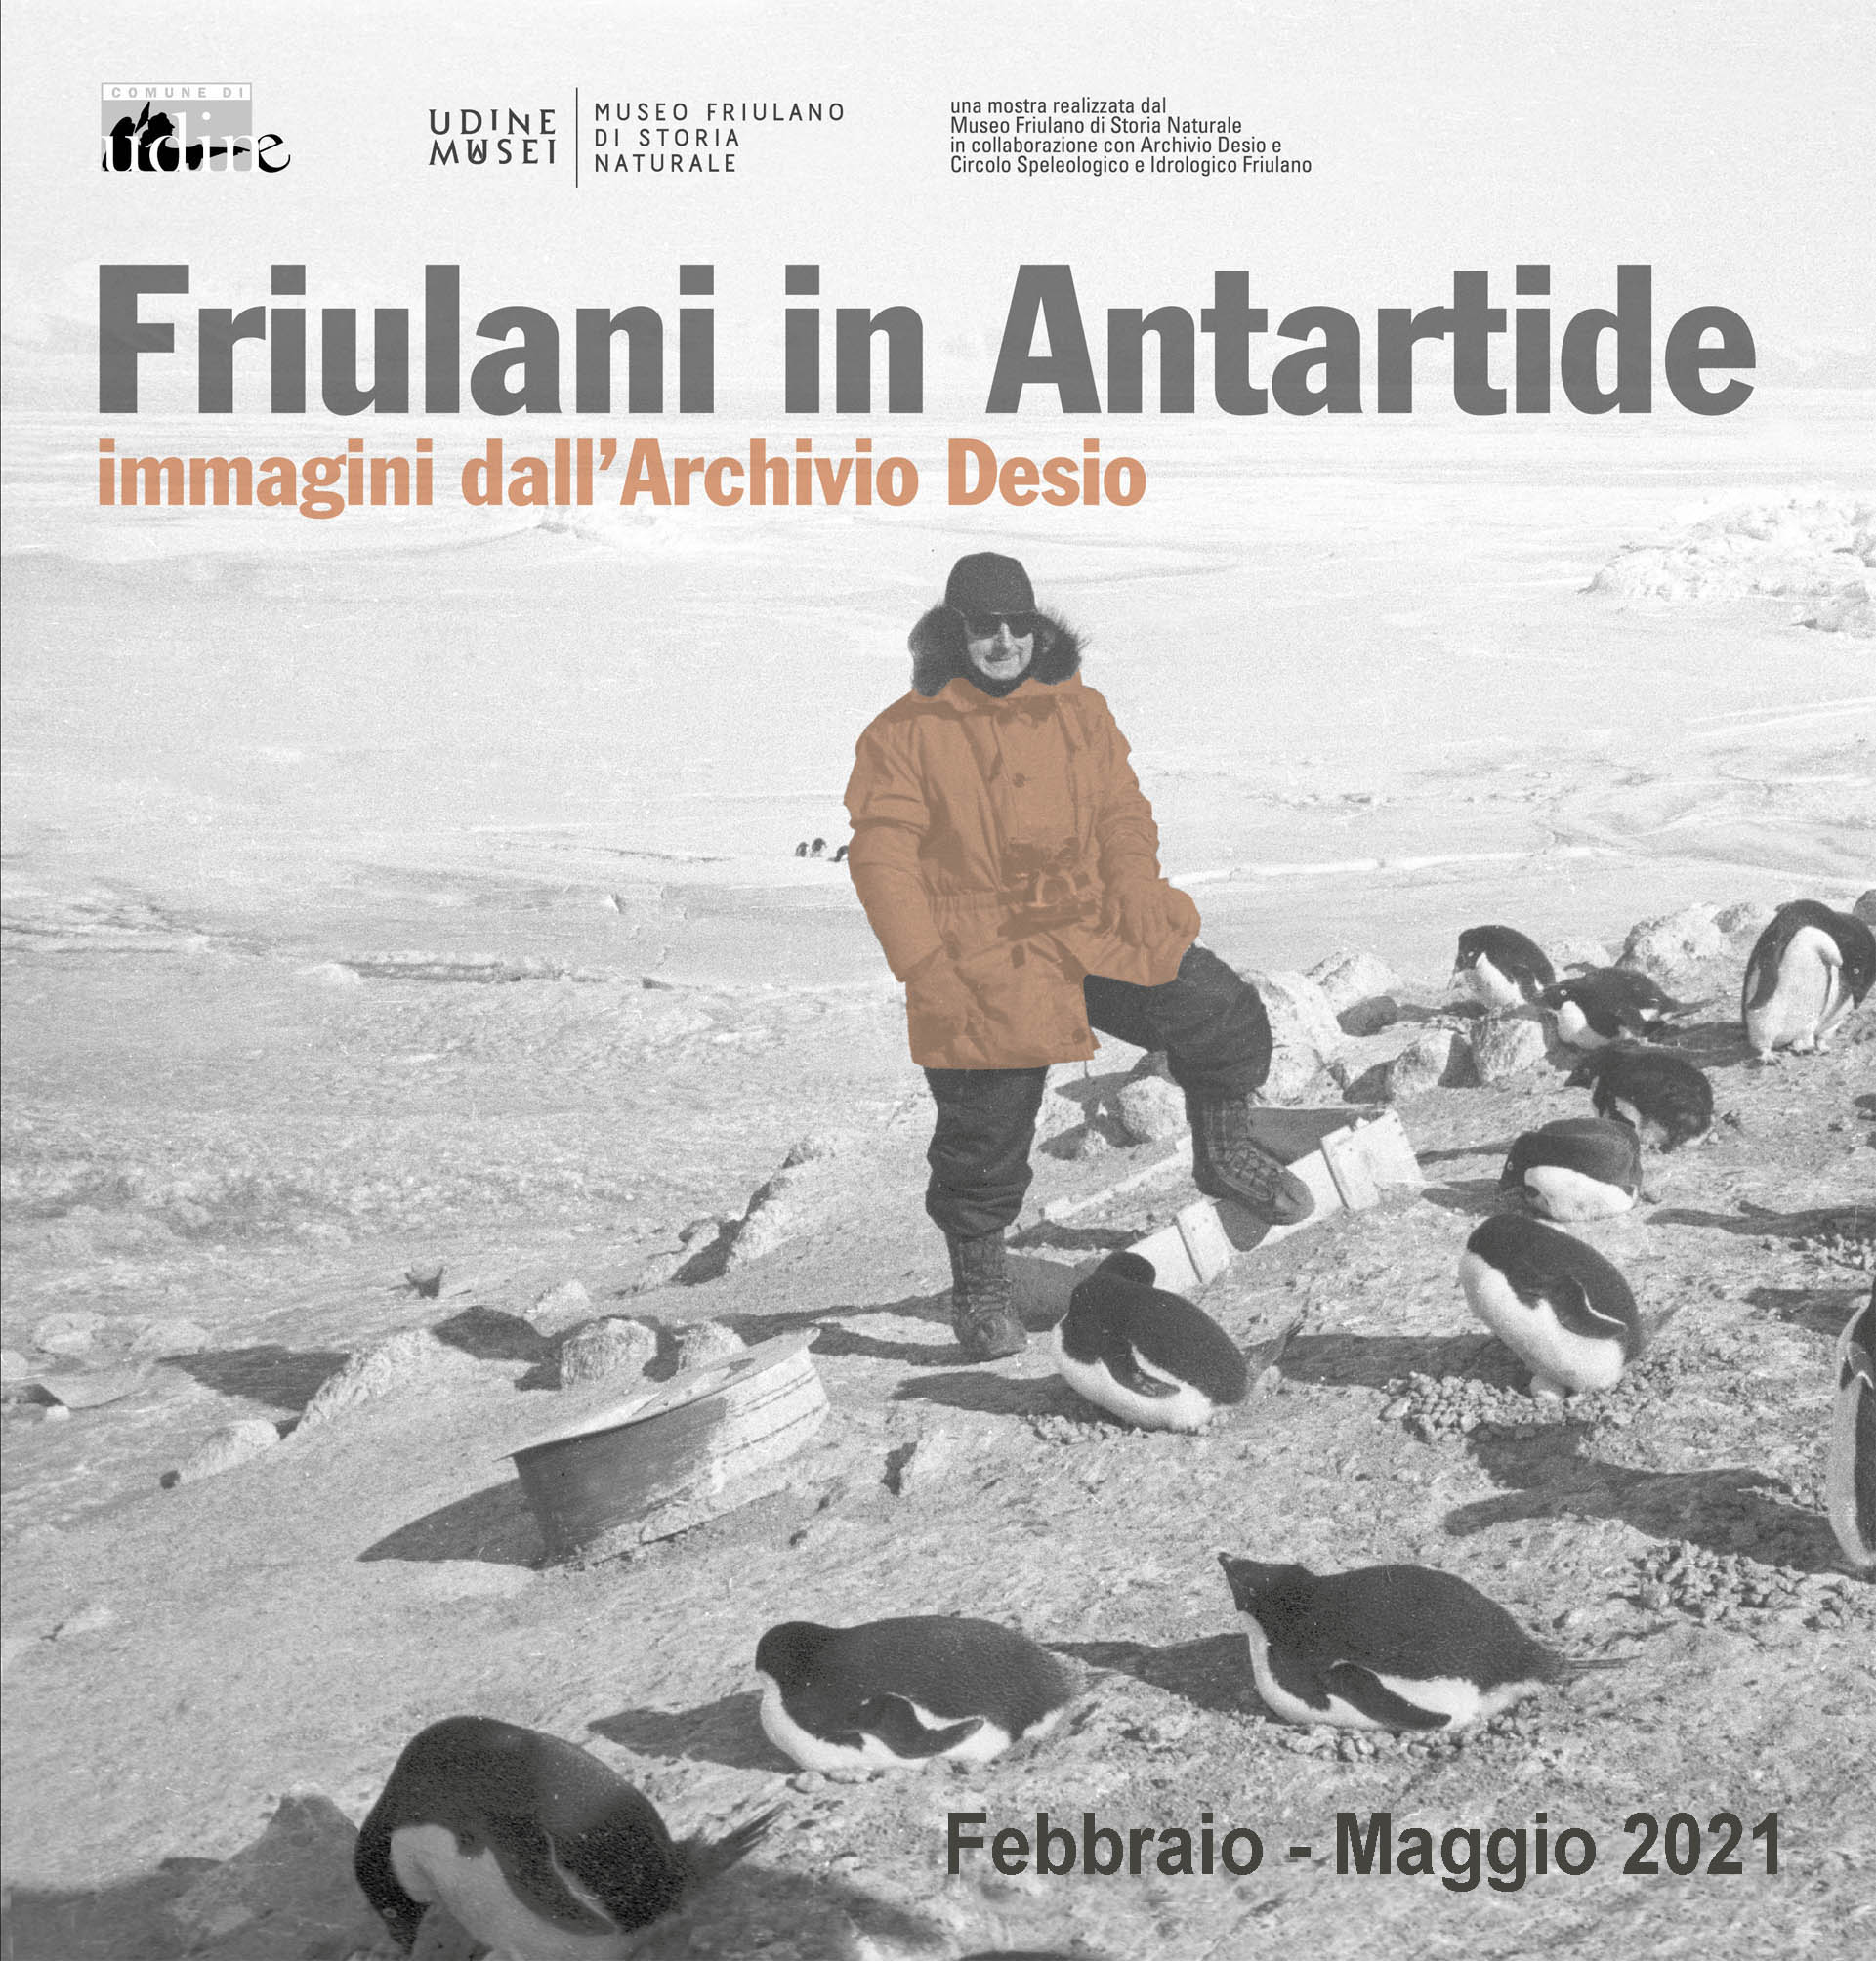 Friulani in Antartide New